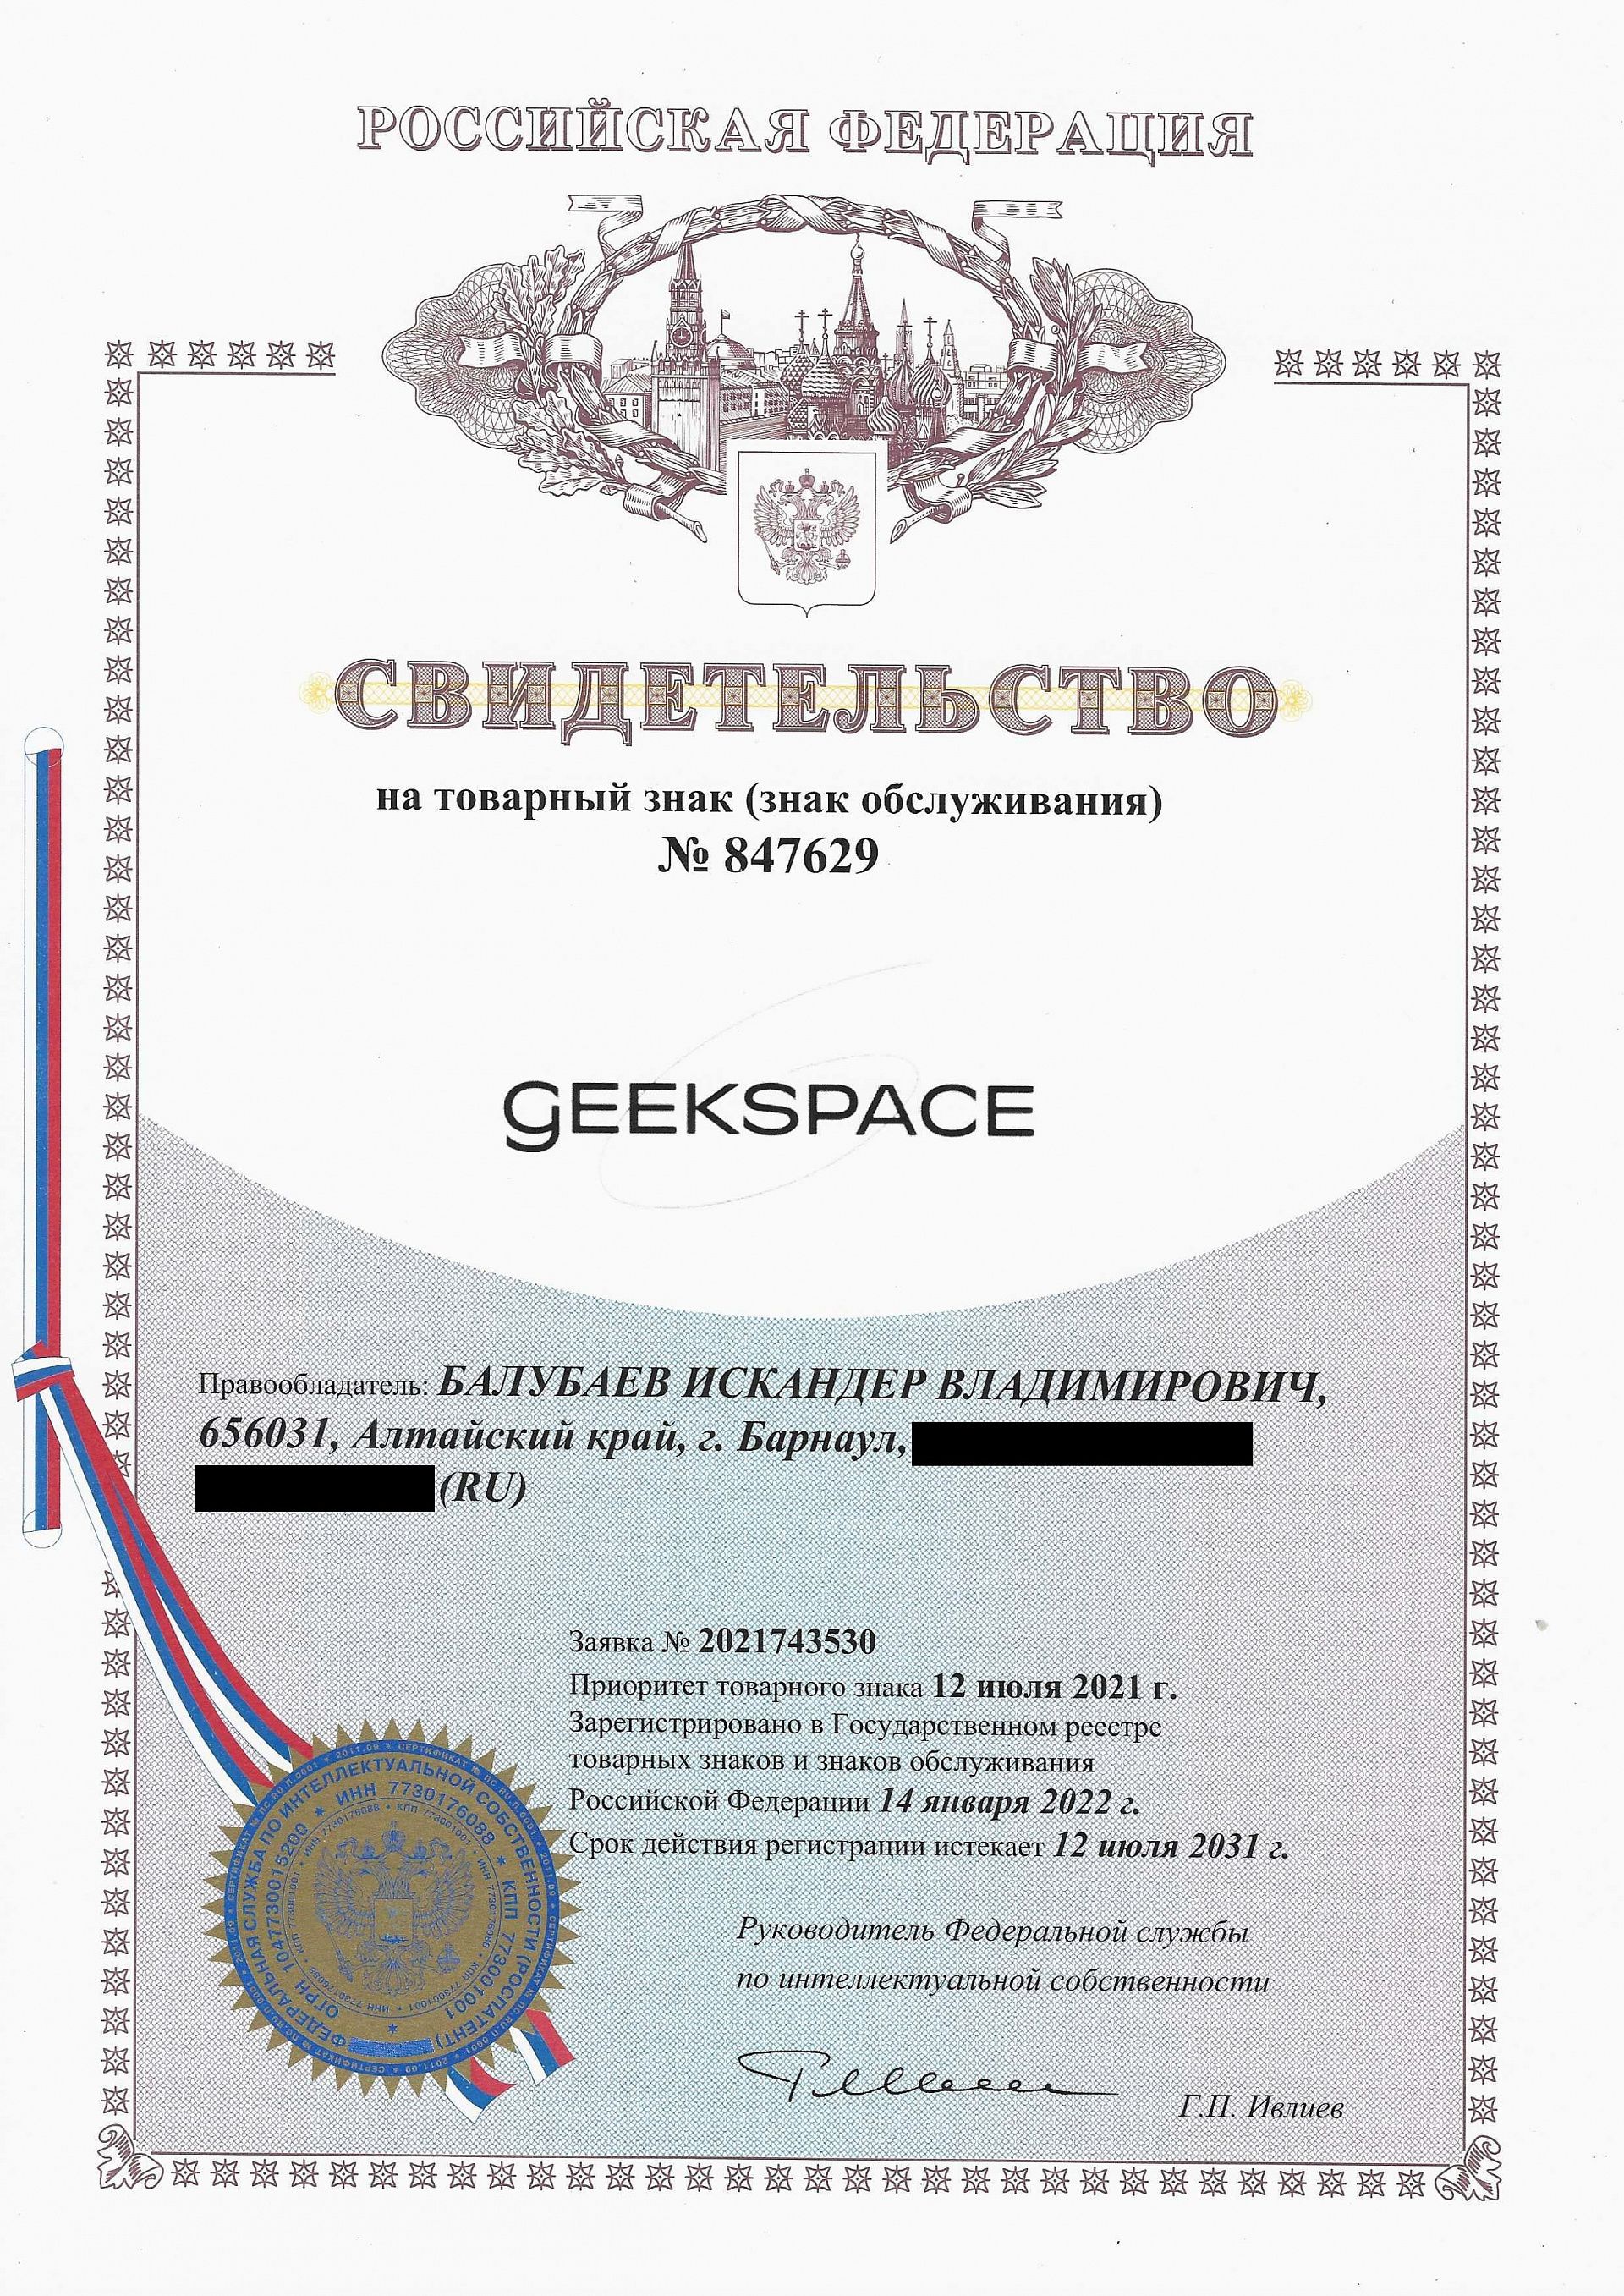 Товарный знак № 847629 – Geekspace